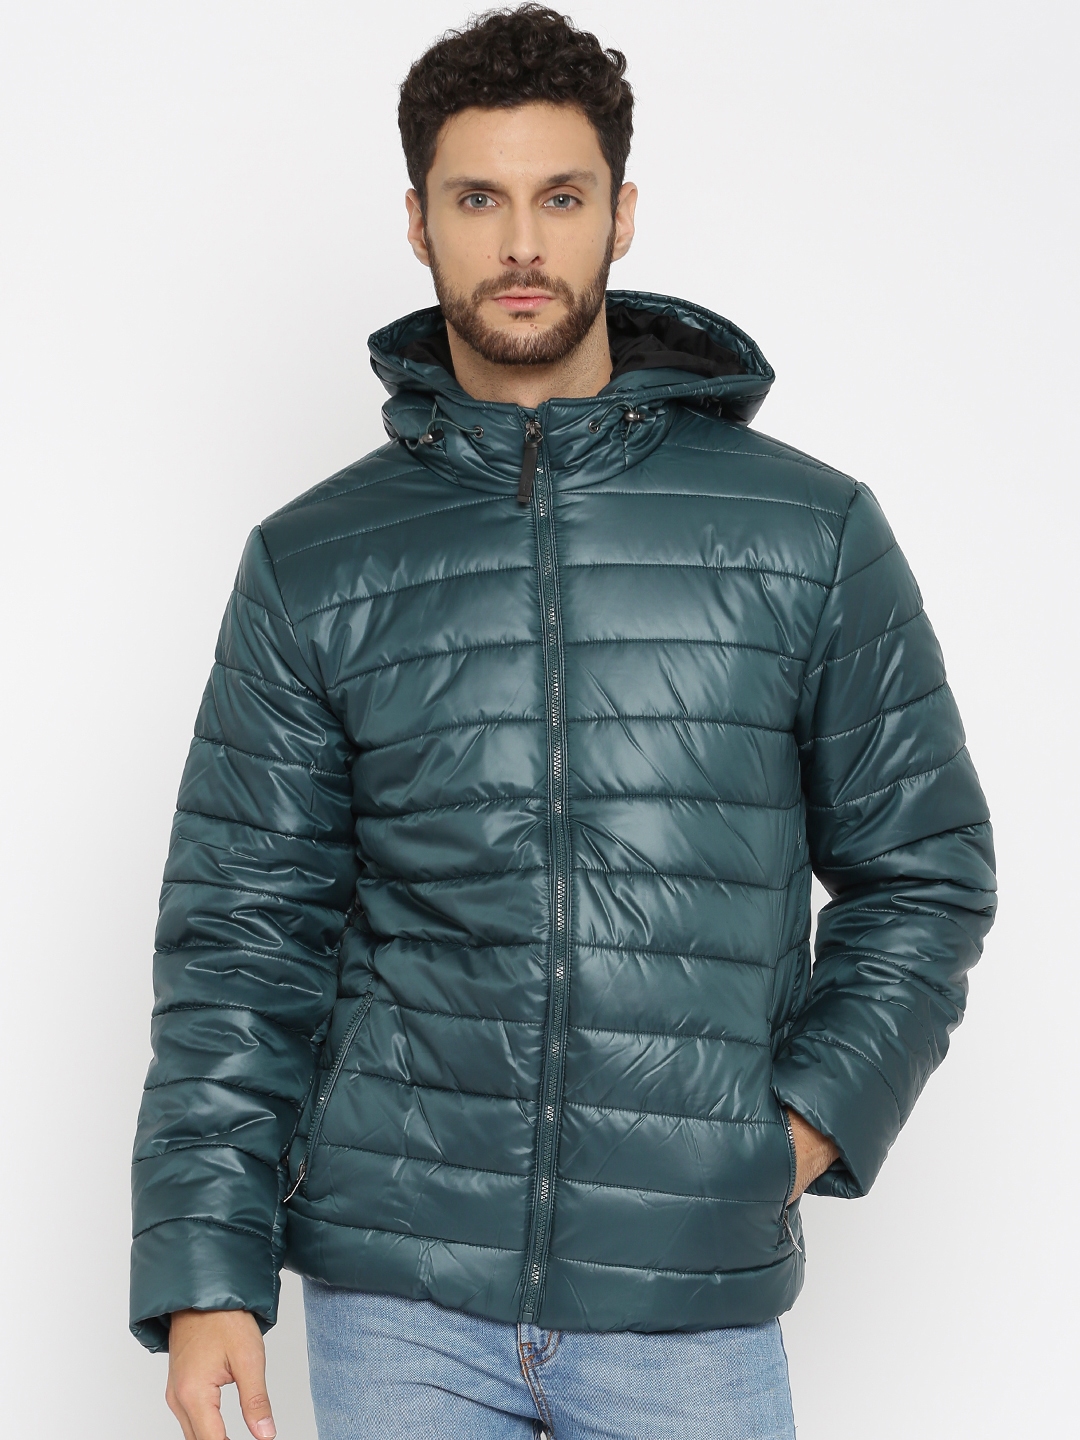 Buy SELA Teal Blue Hooded Jacket - Jackets for Men 1568033 | Myntra